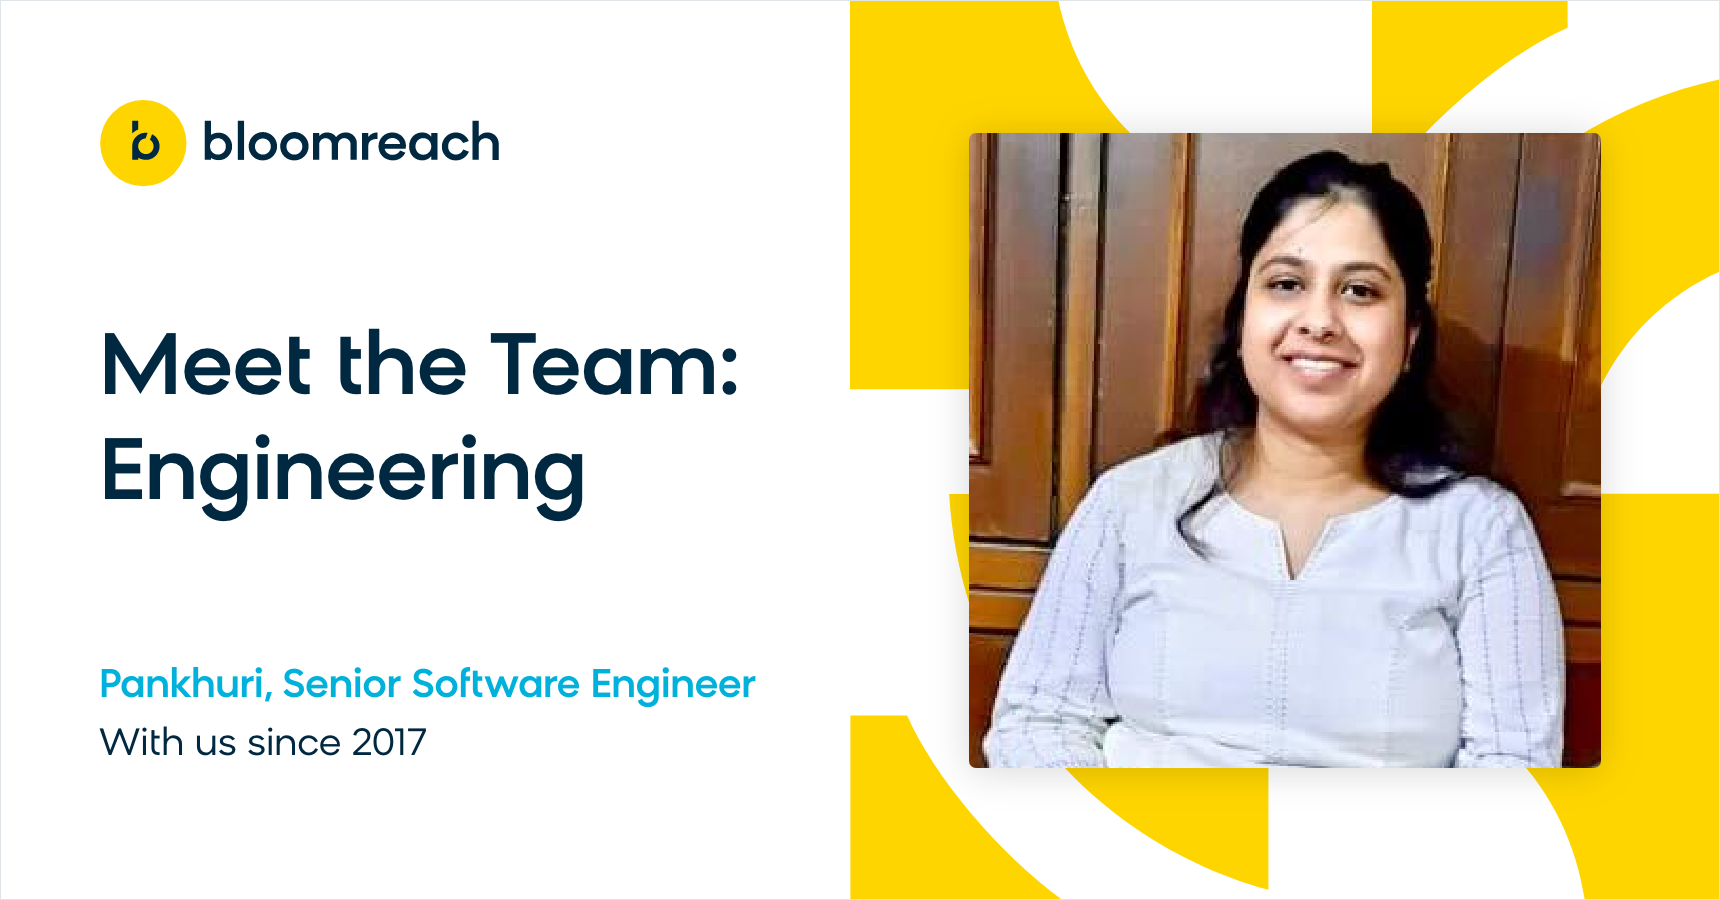 Meet the team at Bloomreach: Senior Software Engineer Pankhuri